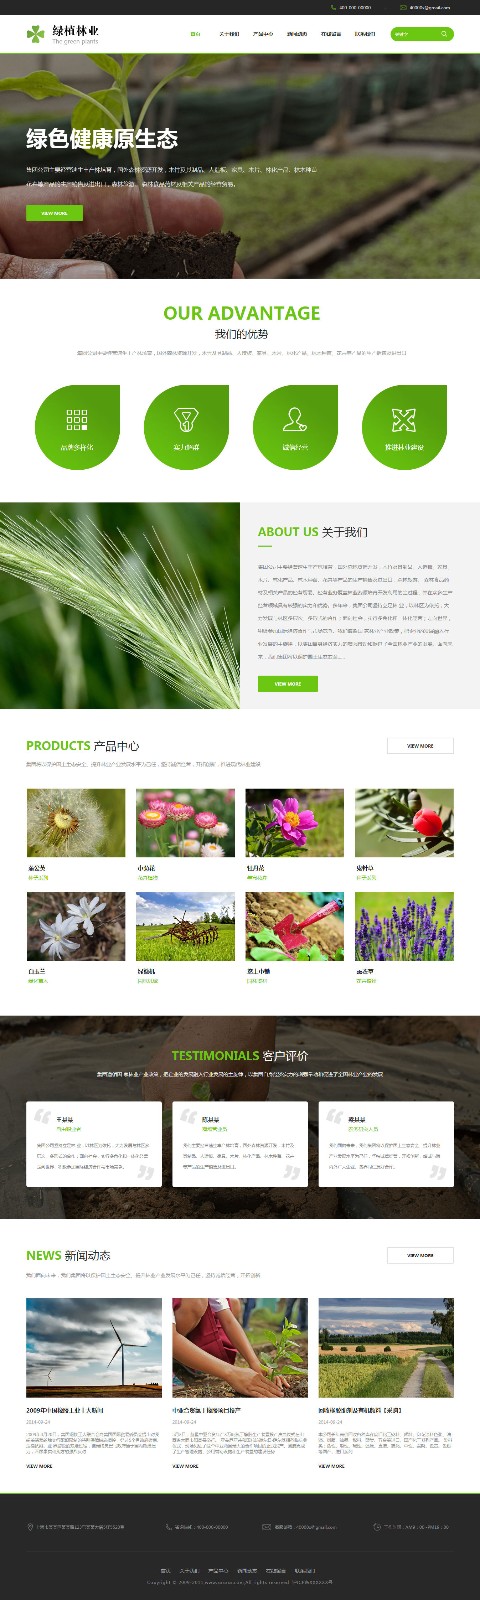 农业网站模板-agriculture-1143657